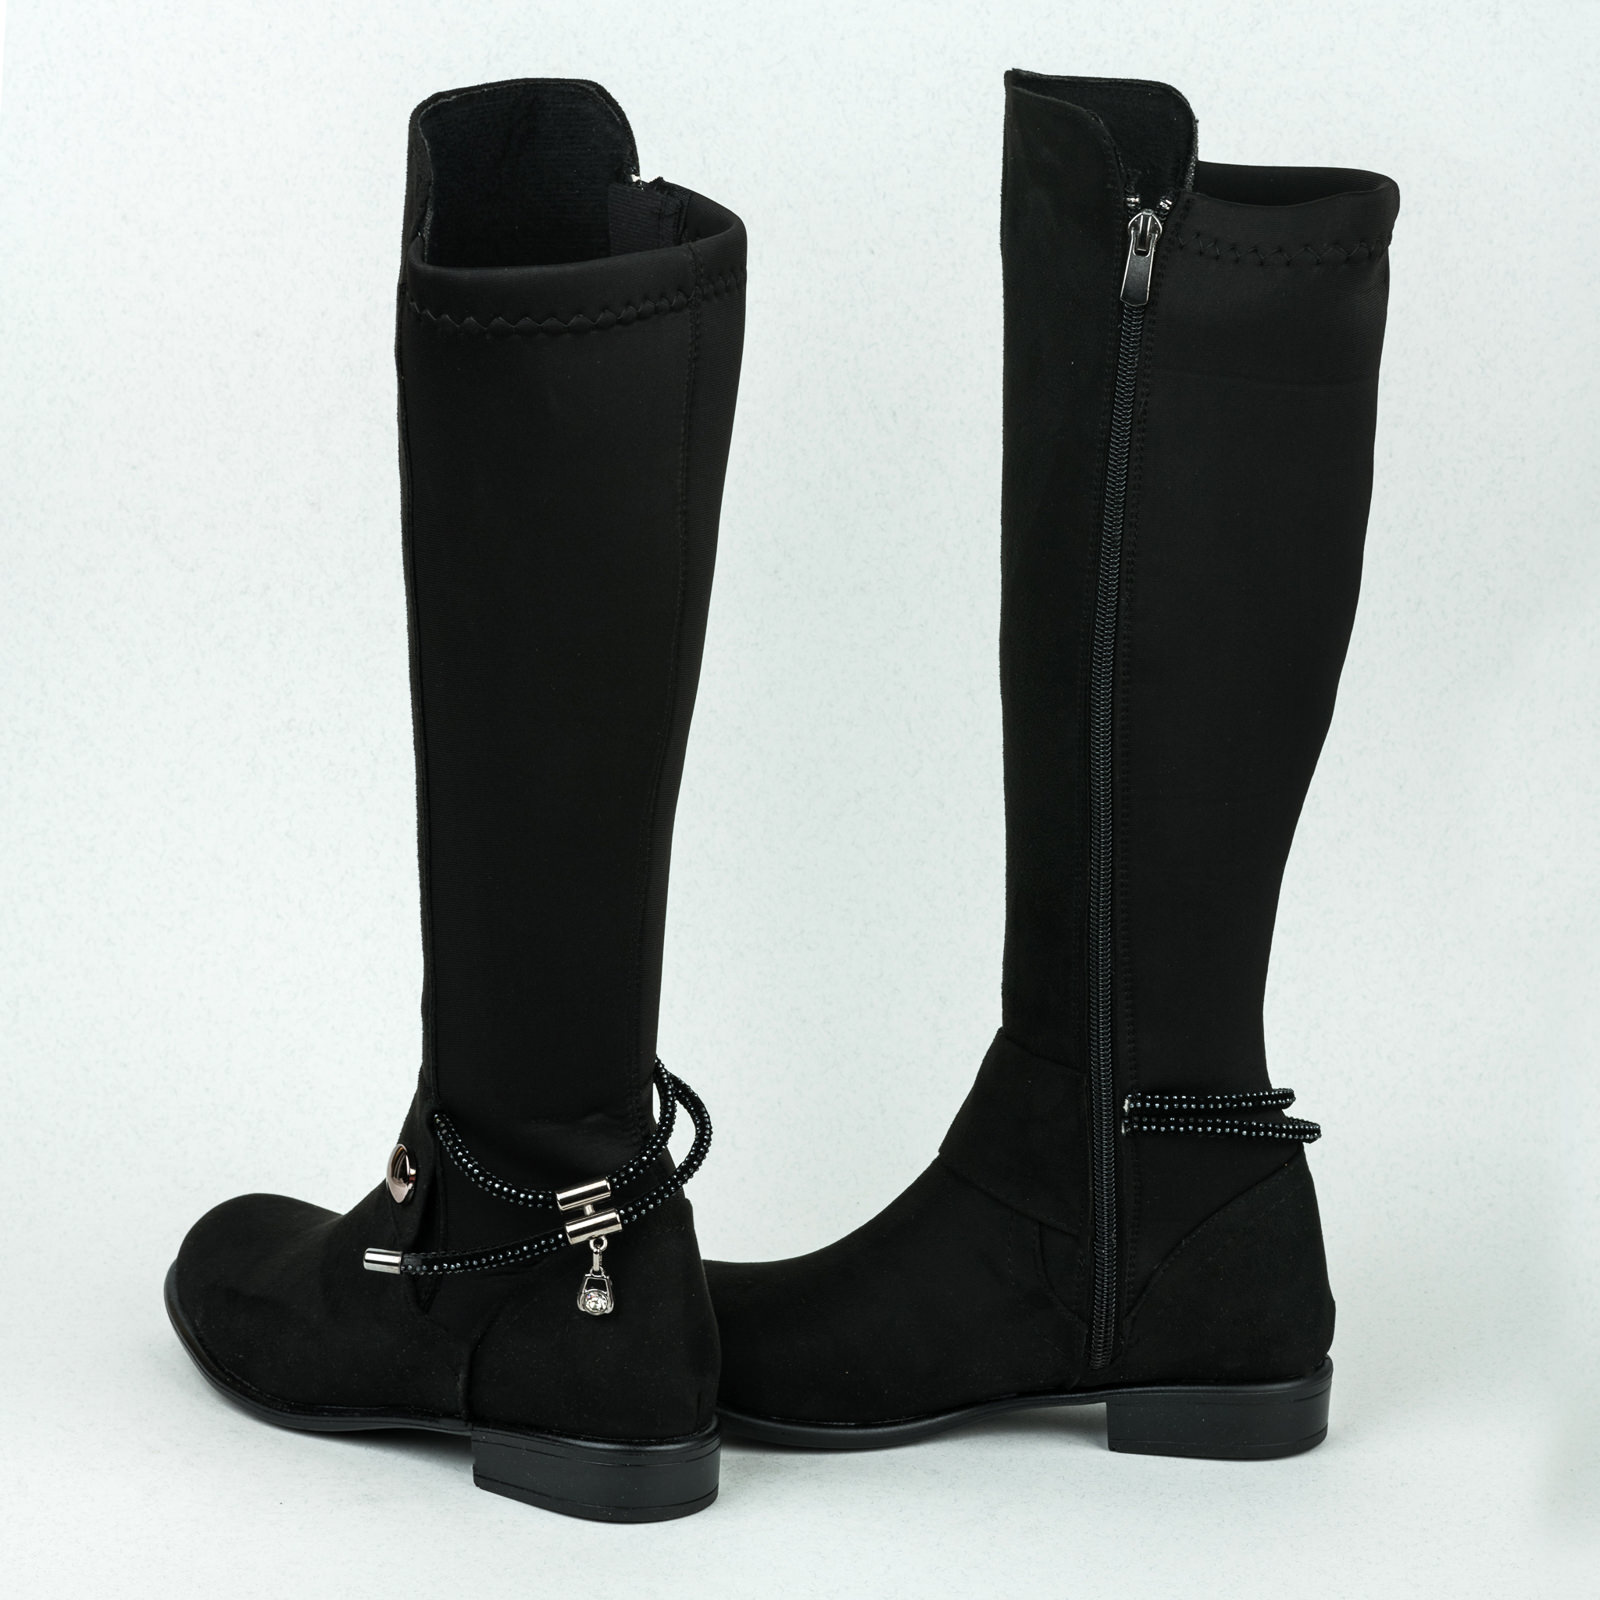 Women boots B108 - BLACK